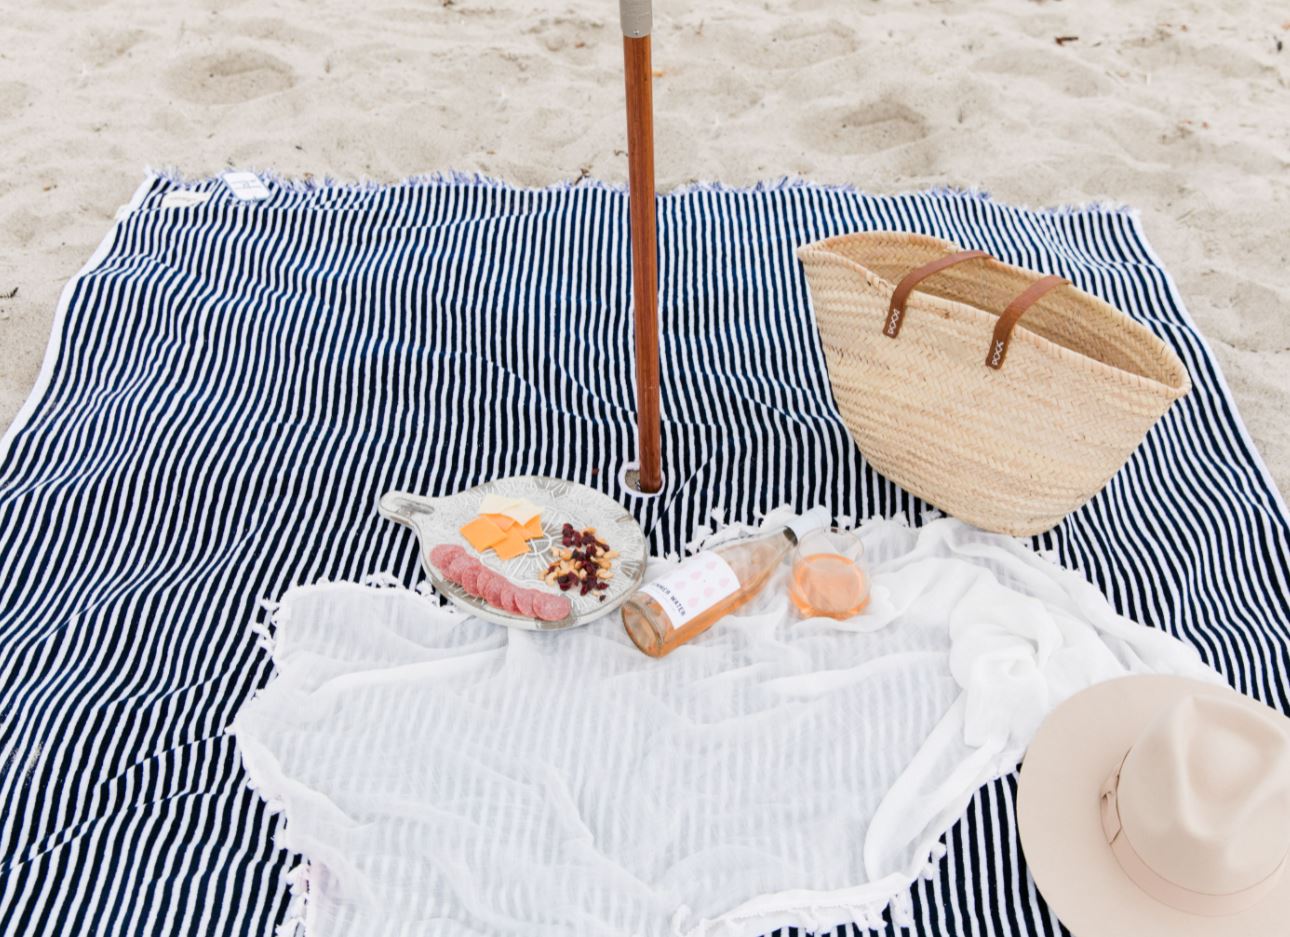 The Beach Blanket - Lauren's Navy Stripe Beach Blanket Business & Pleasure Co 